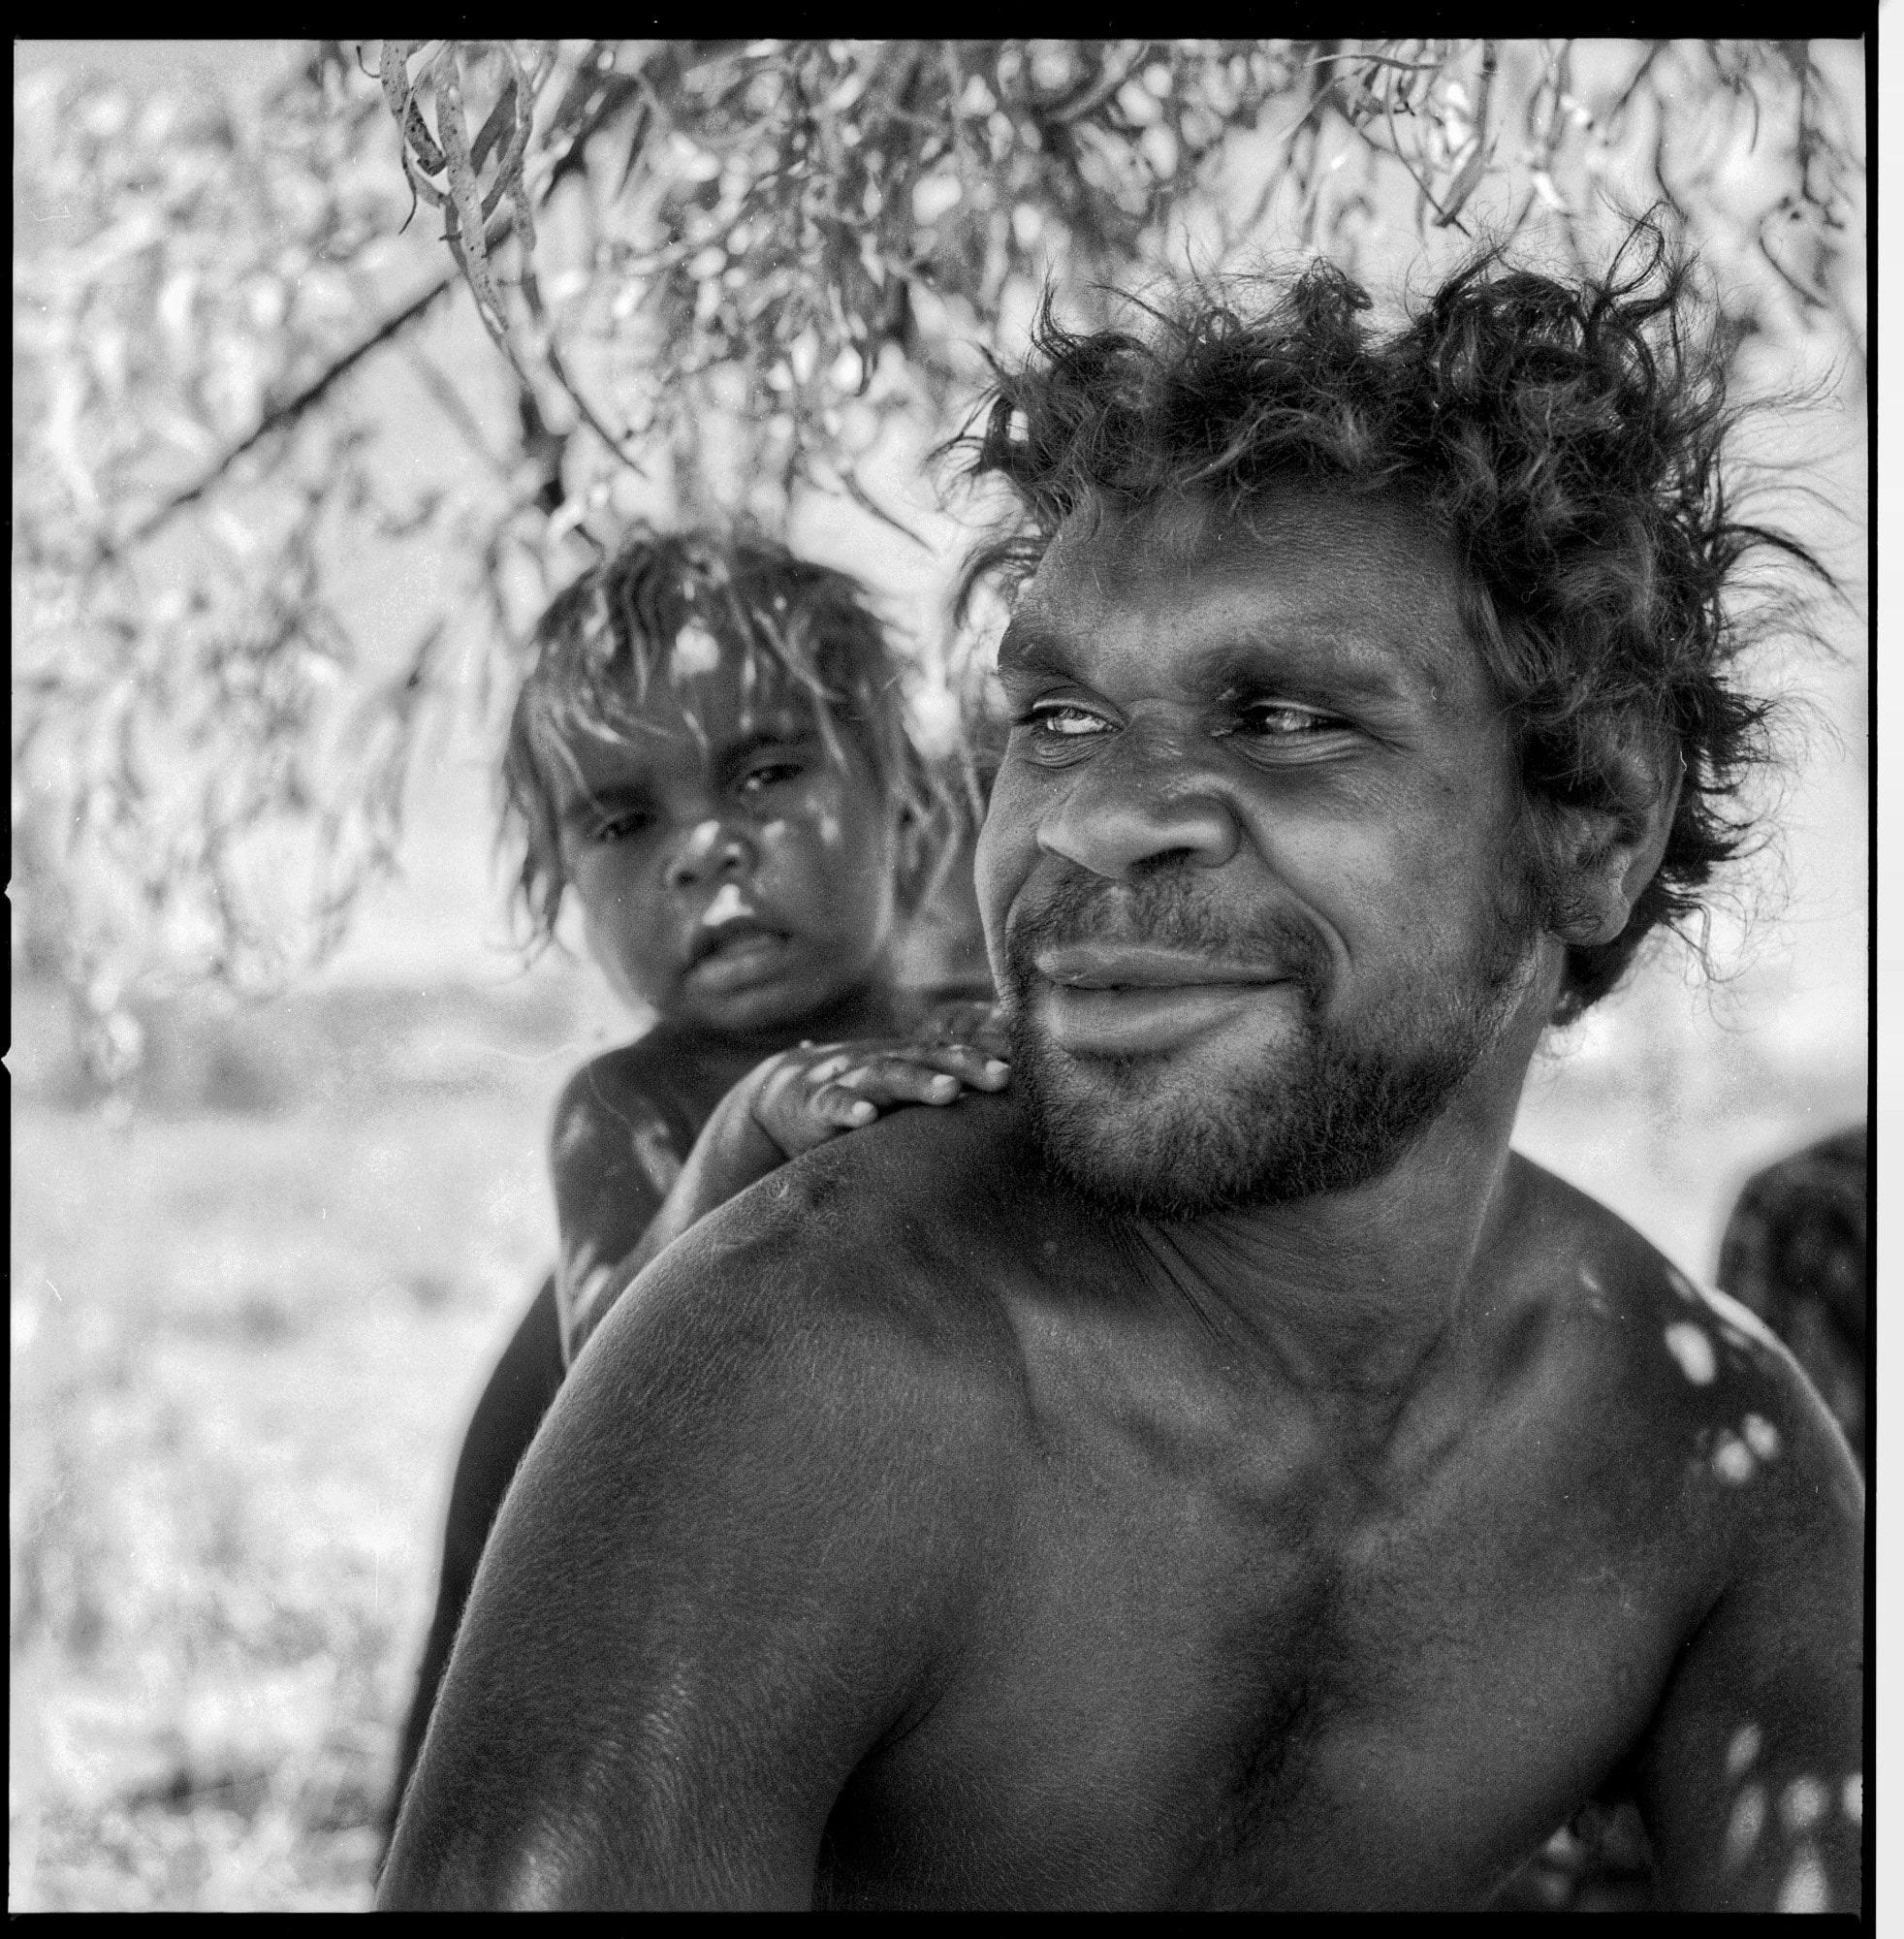 Portretfotografie van Aboriginals – ‘Time travellers along the highway’